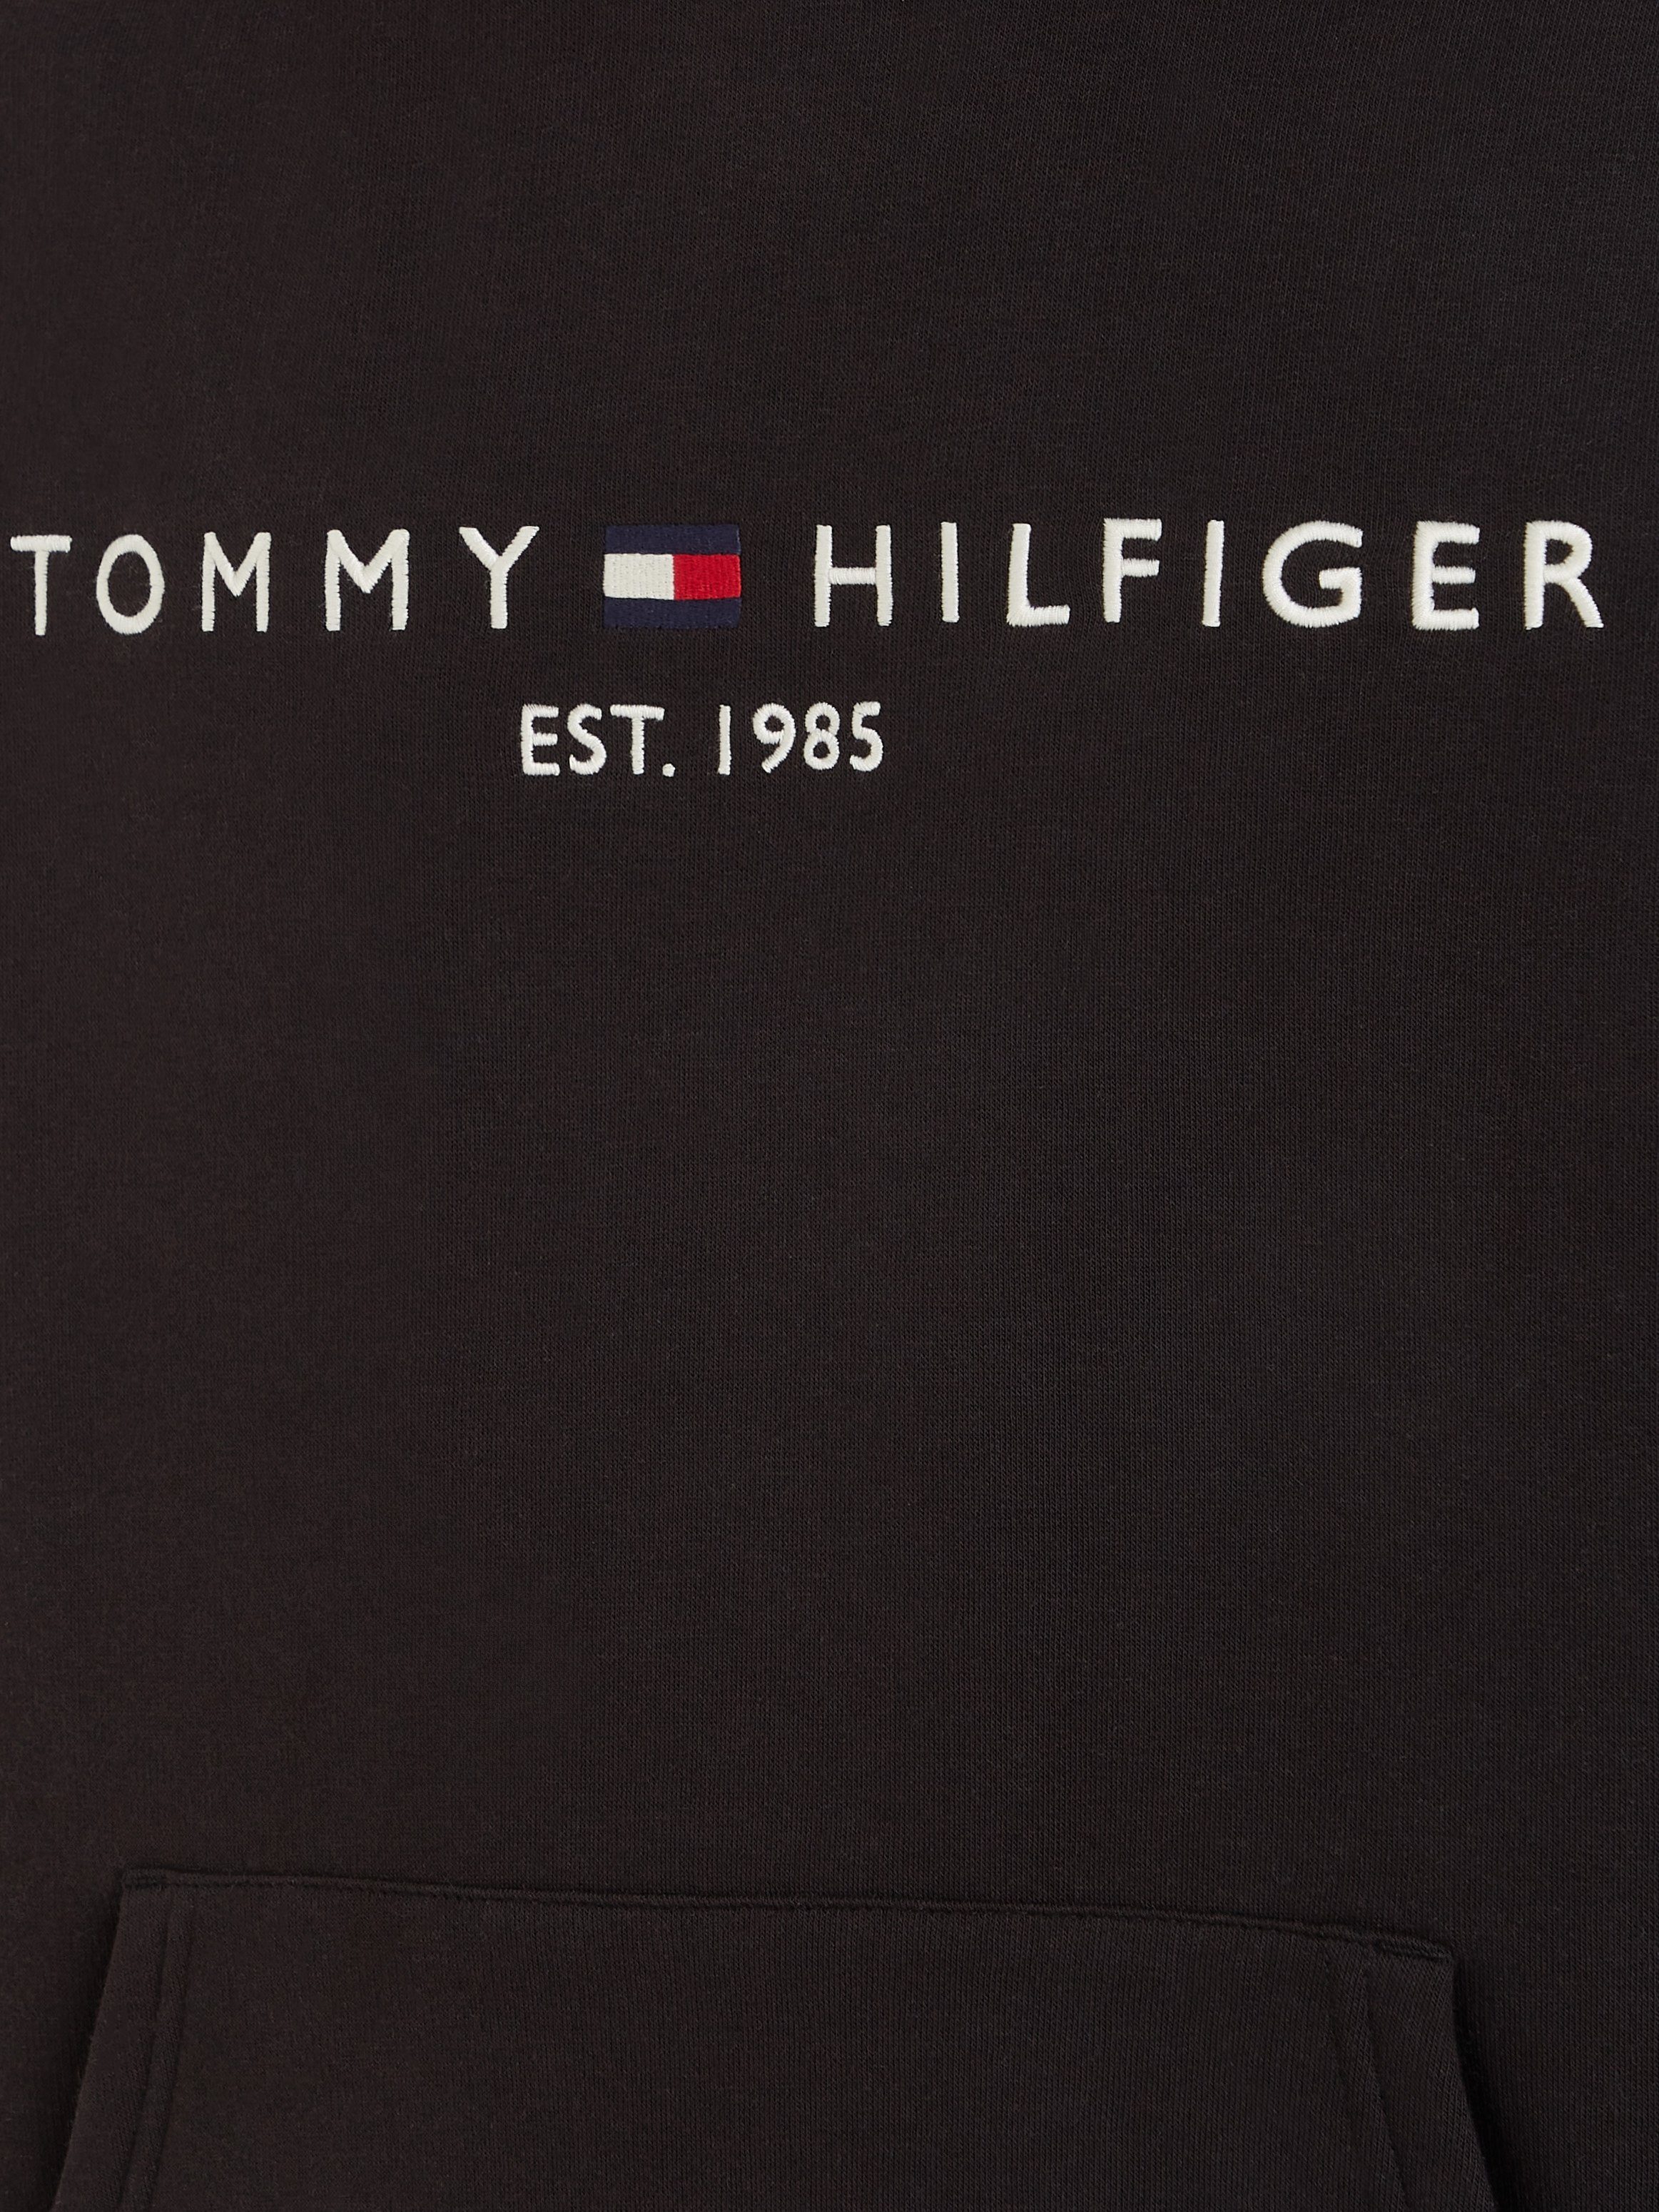 HOODY LOGO Kapuzensweatshirt black Hilfiger Tommy TOMMY jet